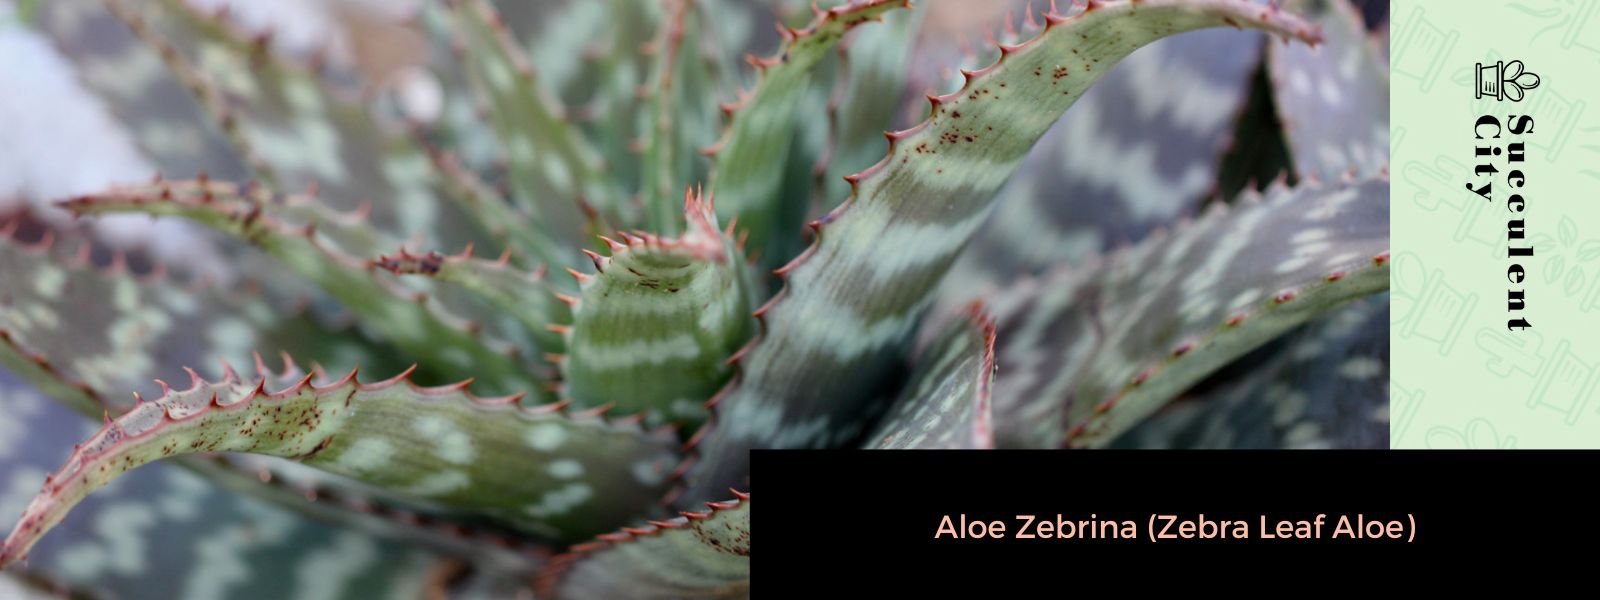 Aloe Zebrina (sábila de hoja de cebra)